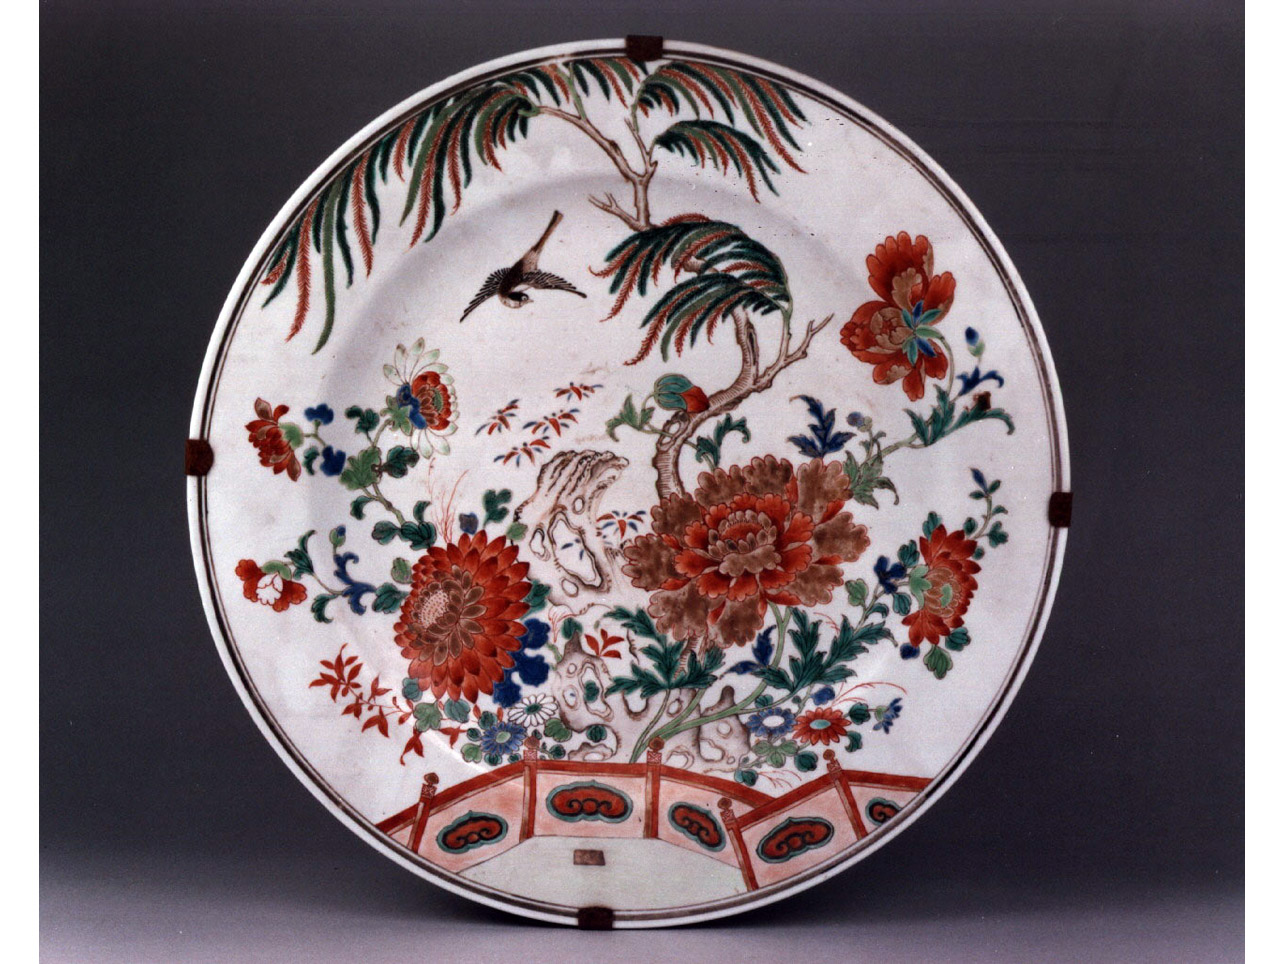 motivi decorativi vegetali e animali (piatto) - manifattura cinese (sec. XVIII)